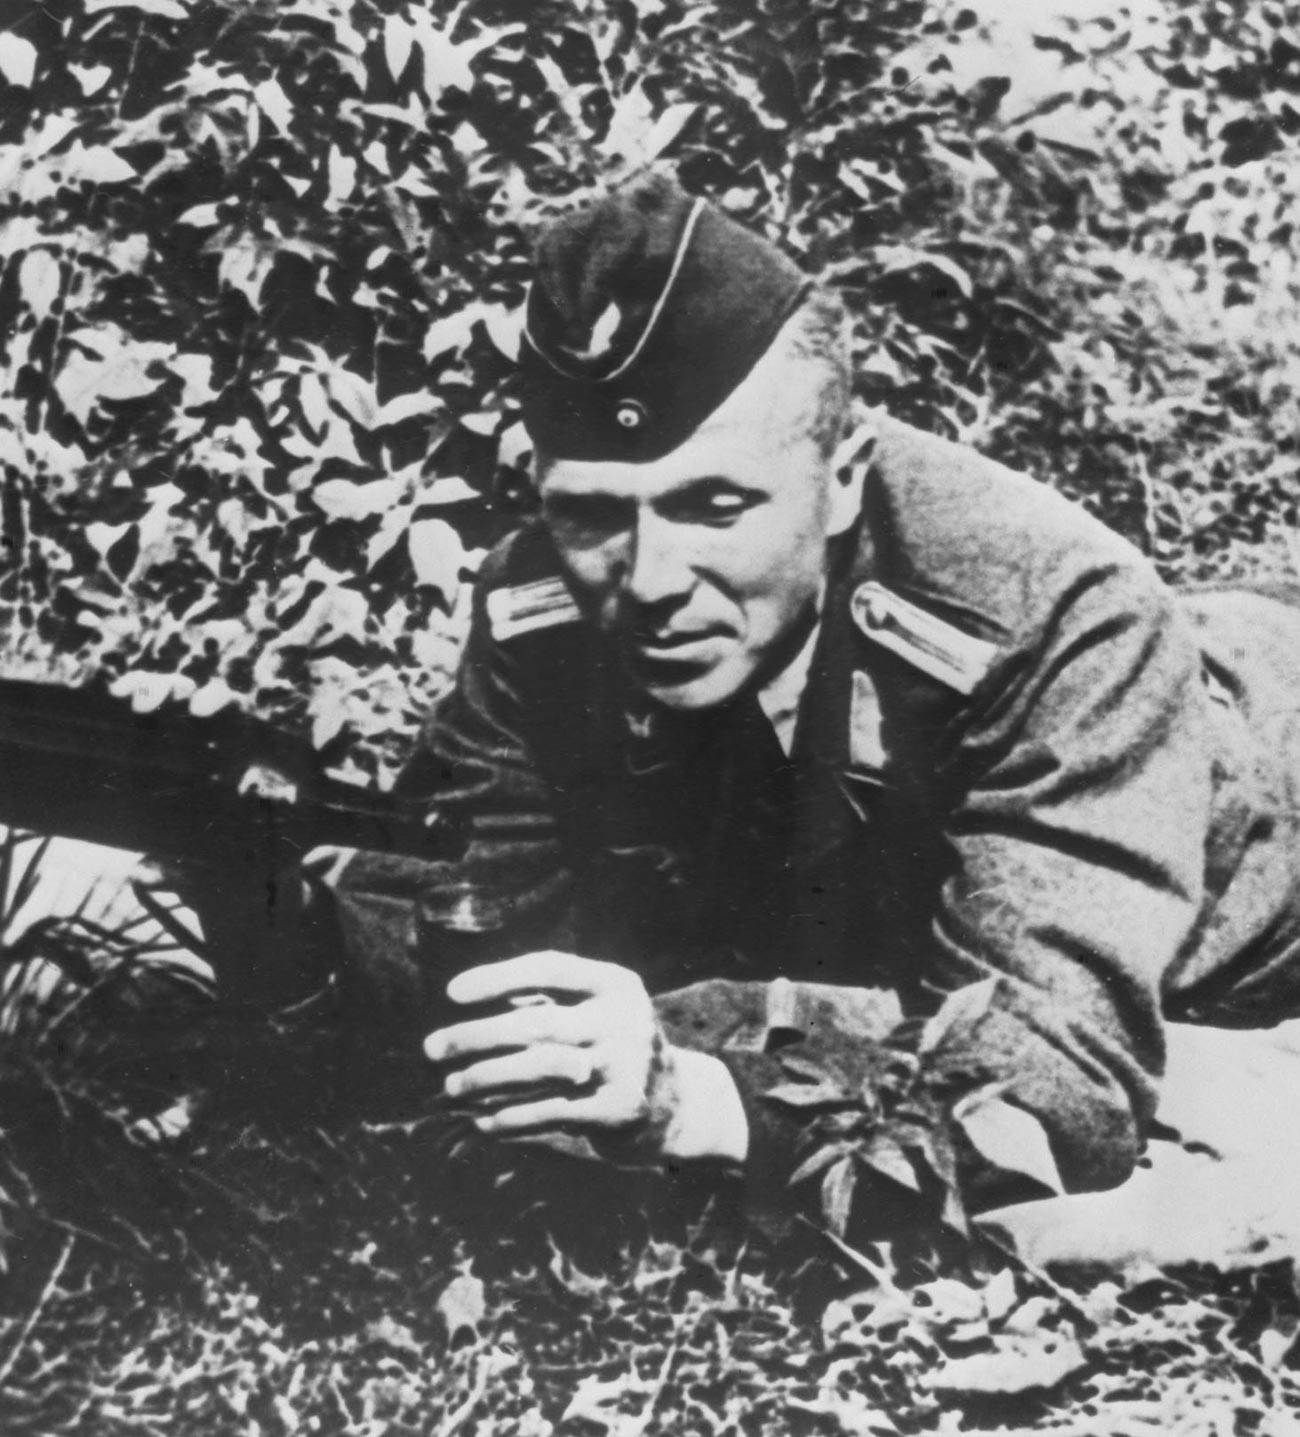 Soviet intelligence officer Nikolai Kuznetsov, the commander of the partisan detachment, in the uniform of a German officer.